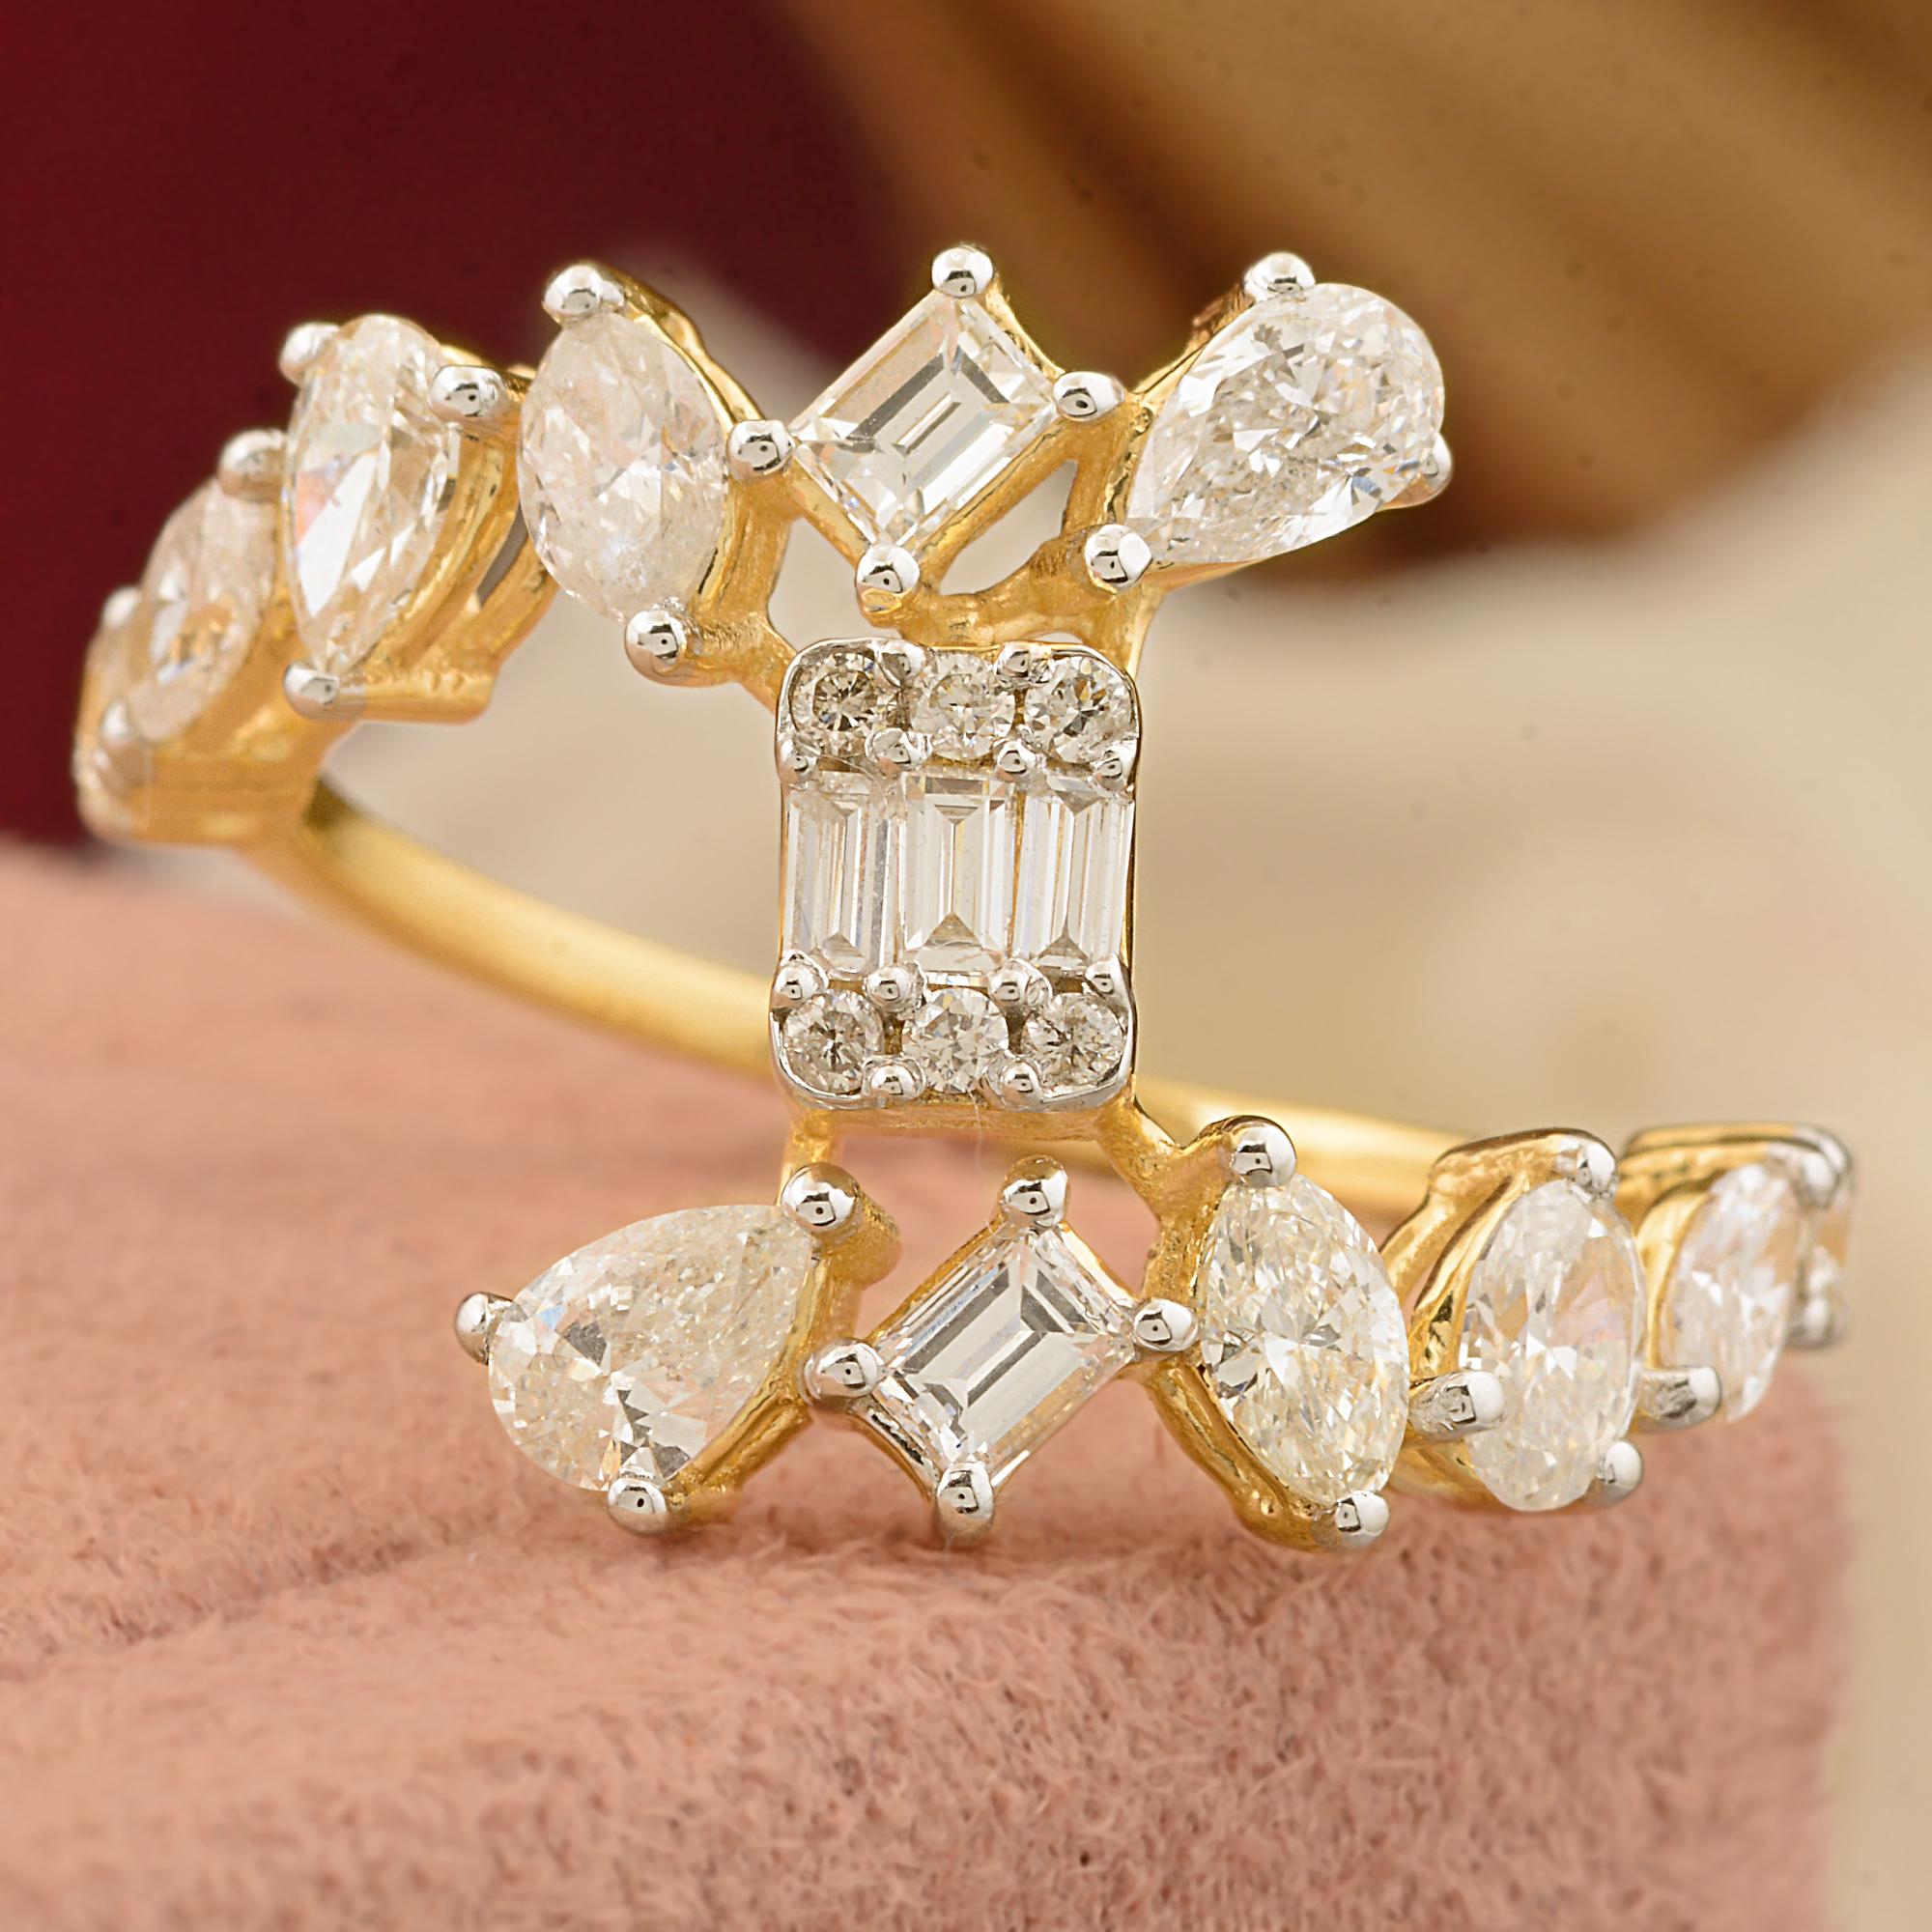 1.6 Carat SI Clarity HI Color Pear Emerald Cut Diamond Ring 14 Karat Yellow Gold For Sale 1